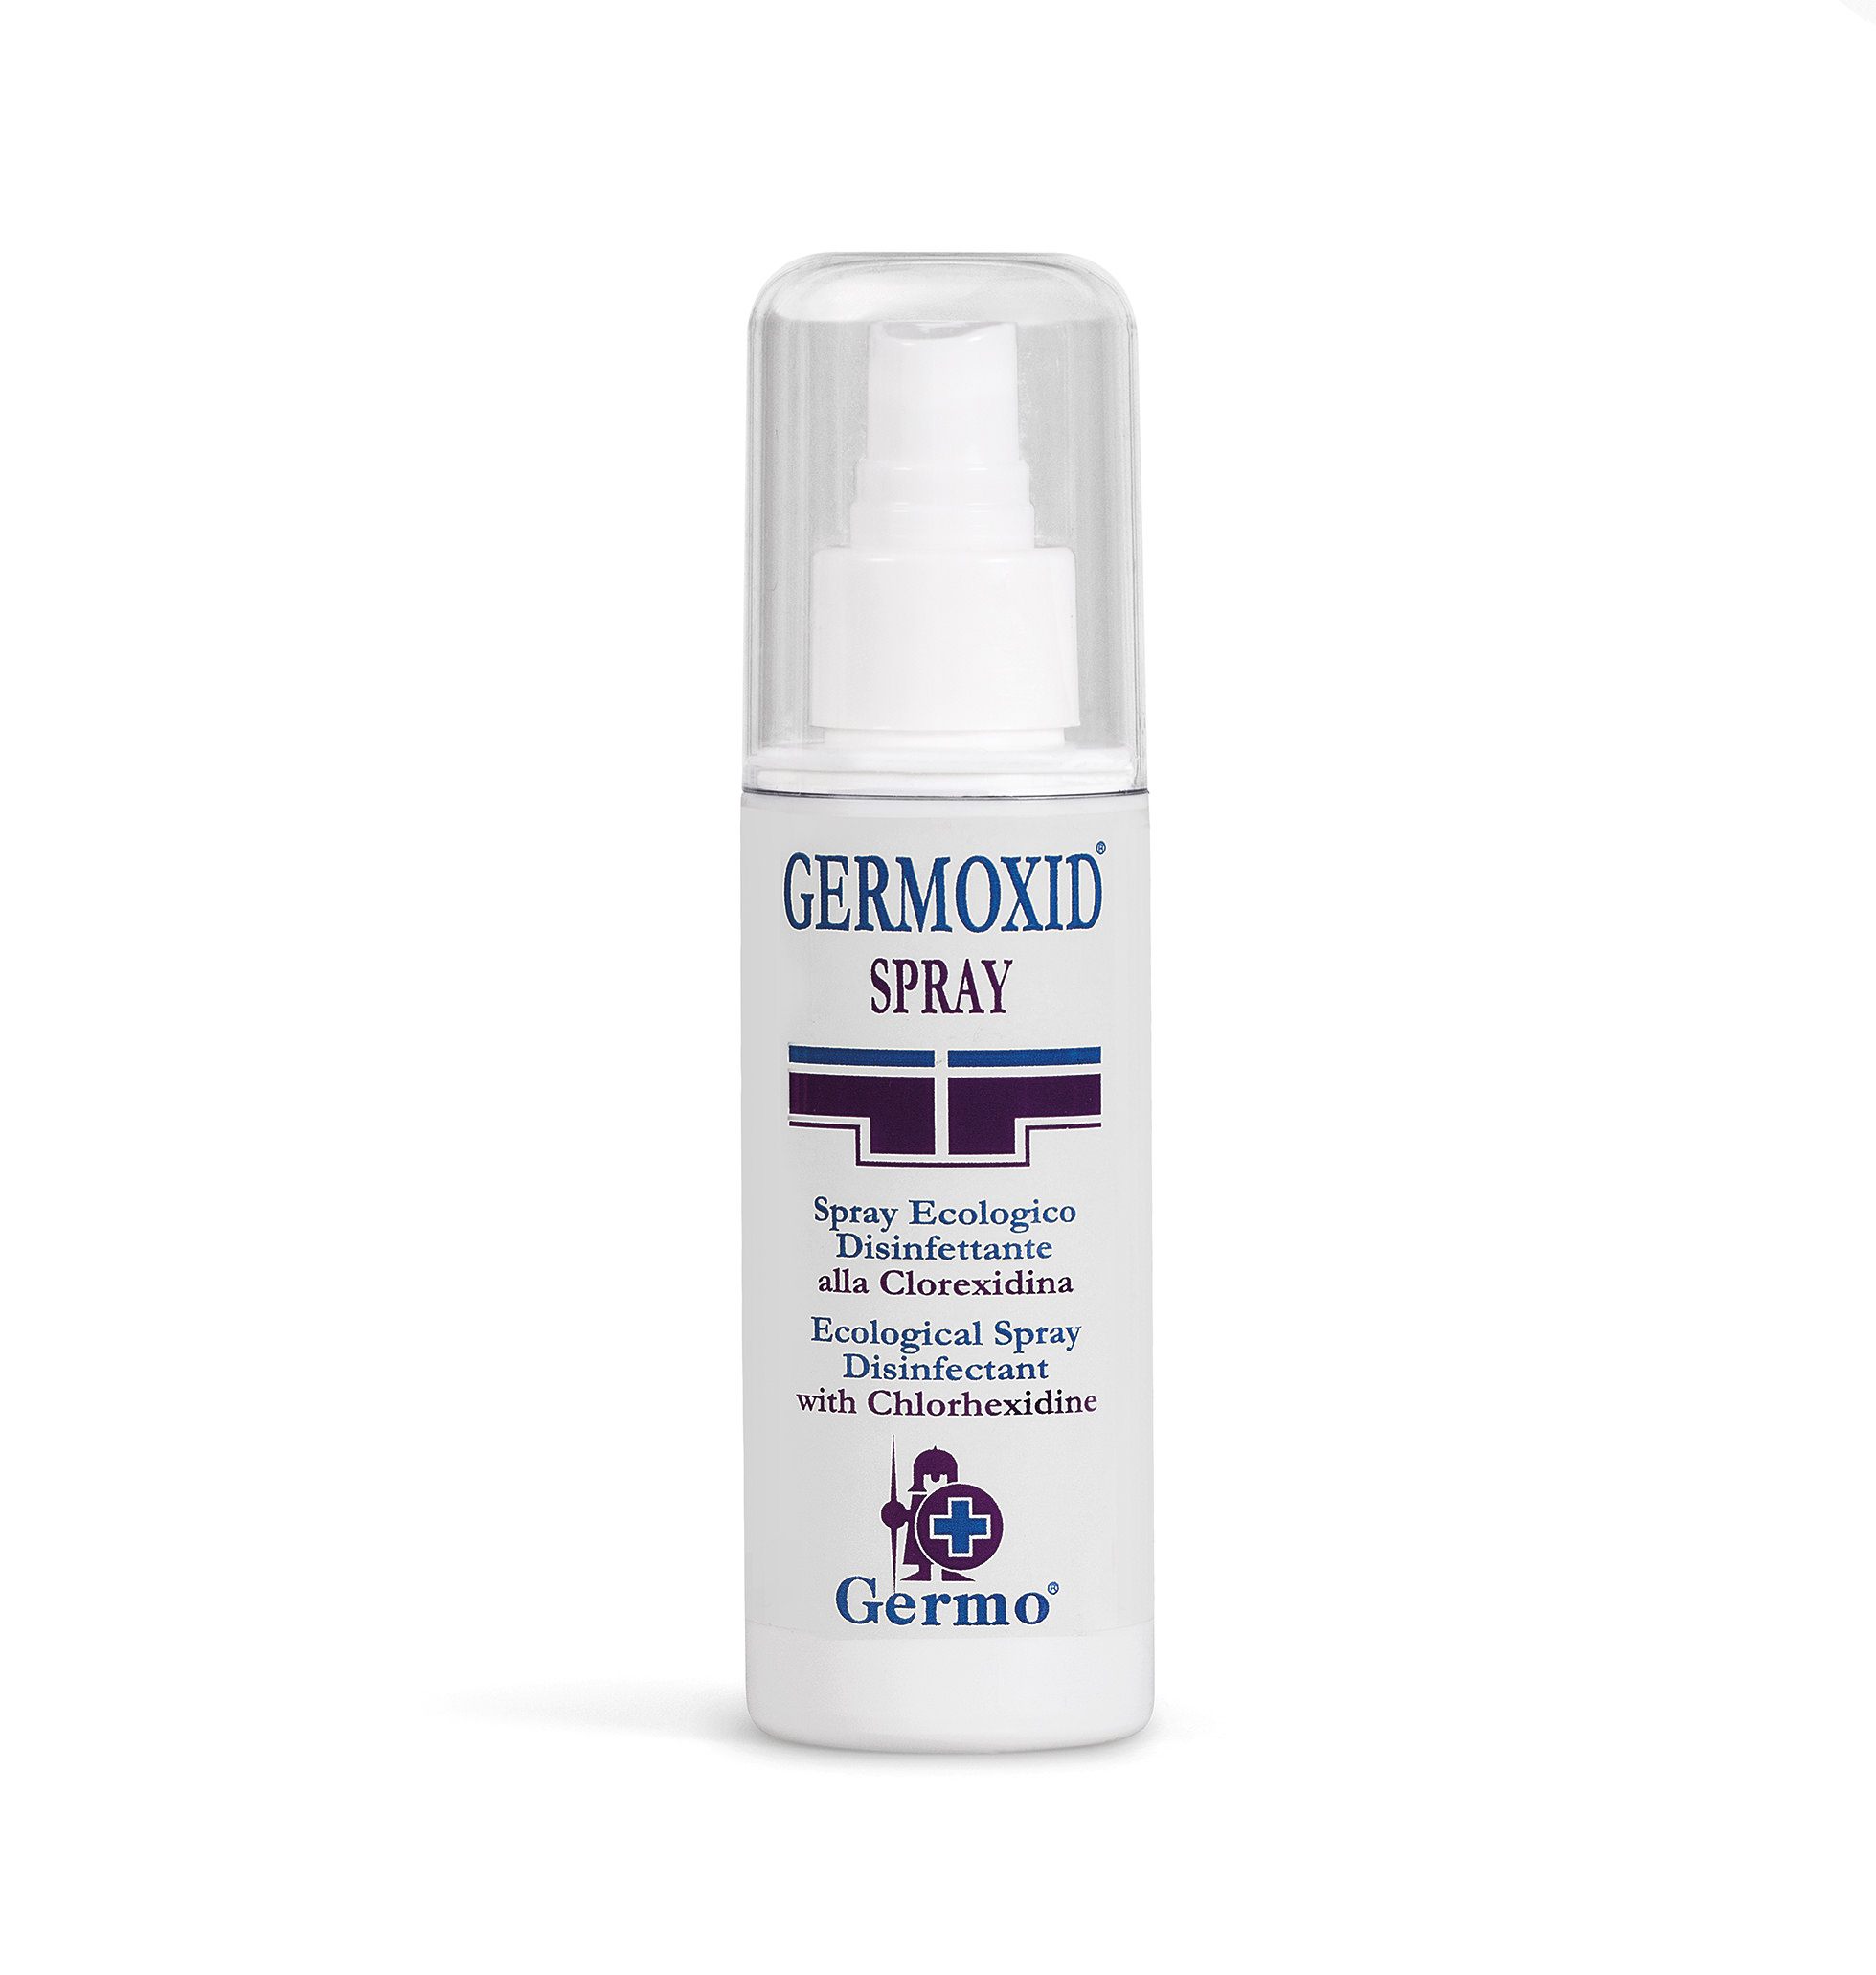 Germoxid spray senza gas 100 ml disinfettante per cute alla Clorexidina